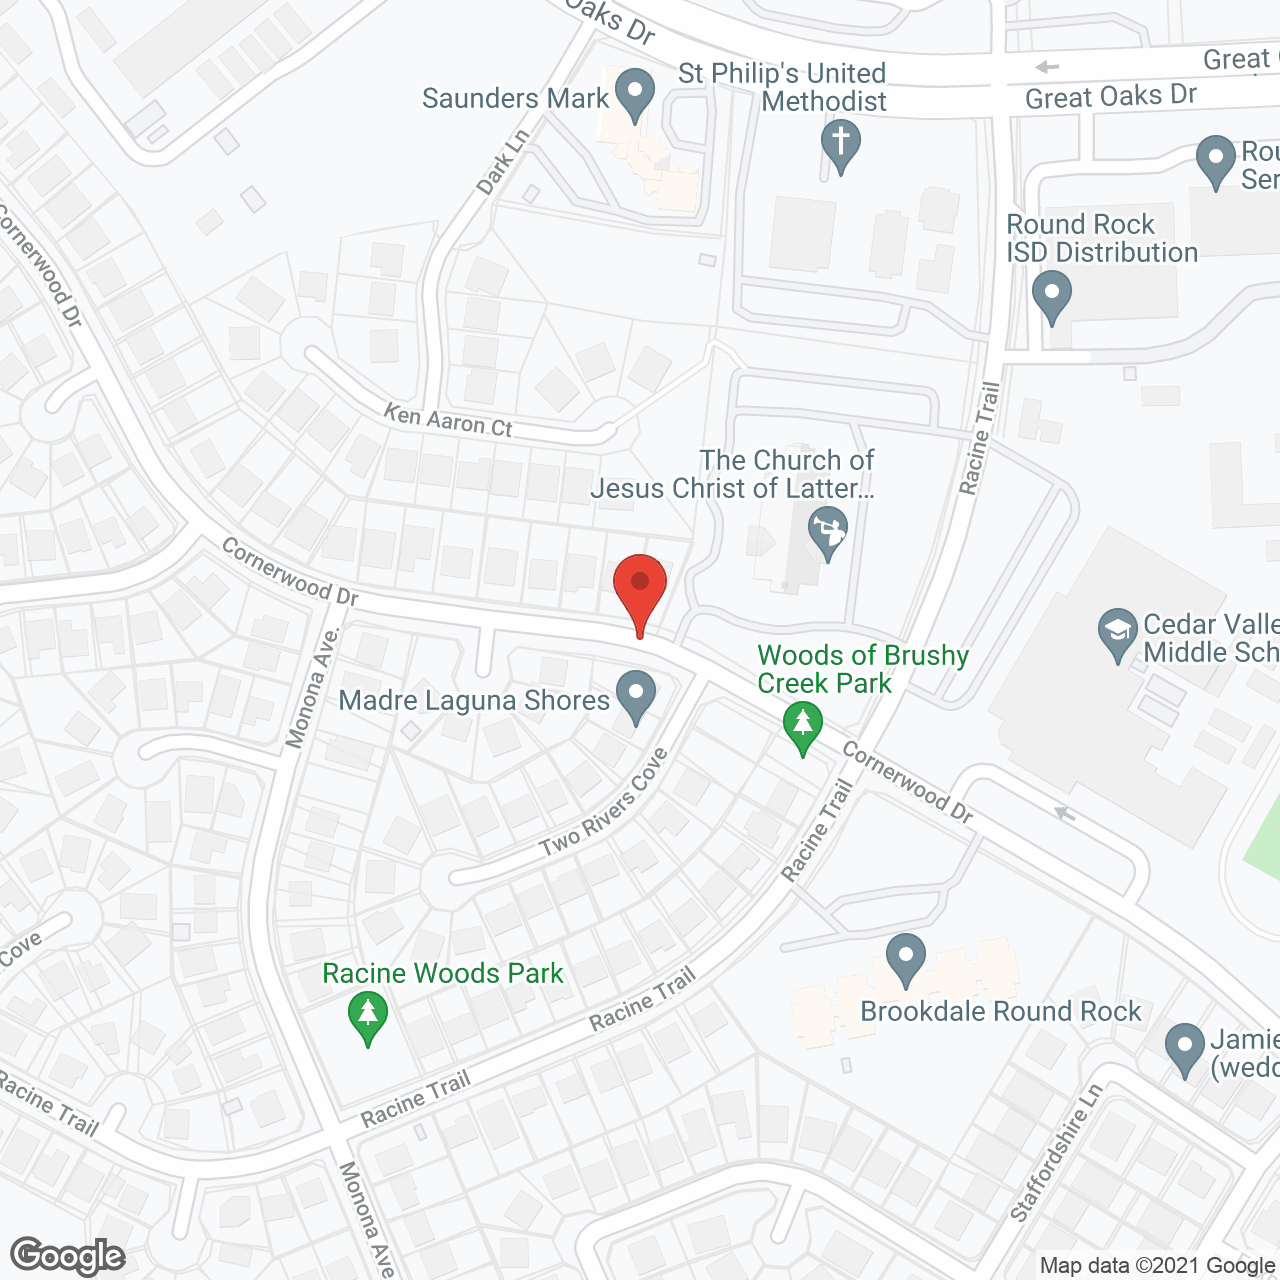 Brookdale Round Rock in google map